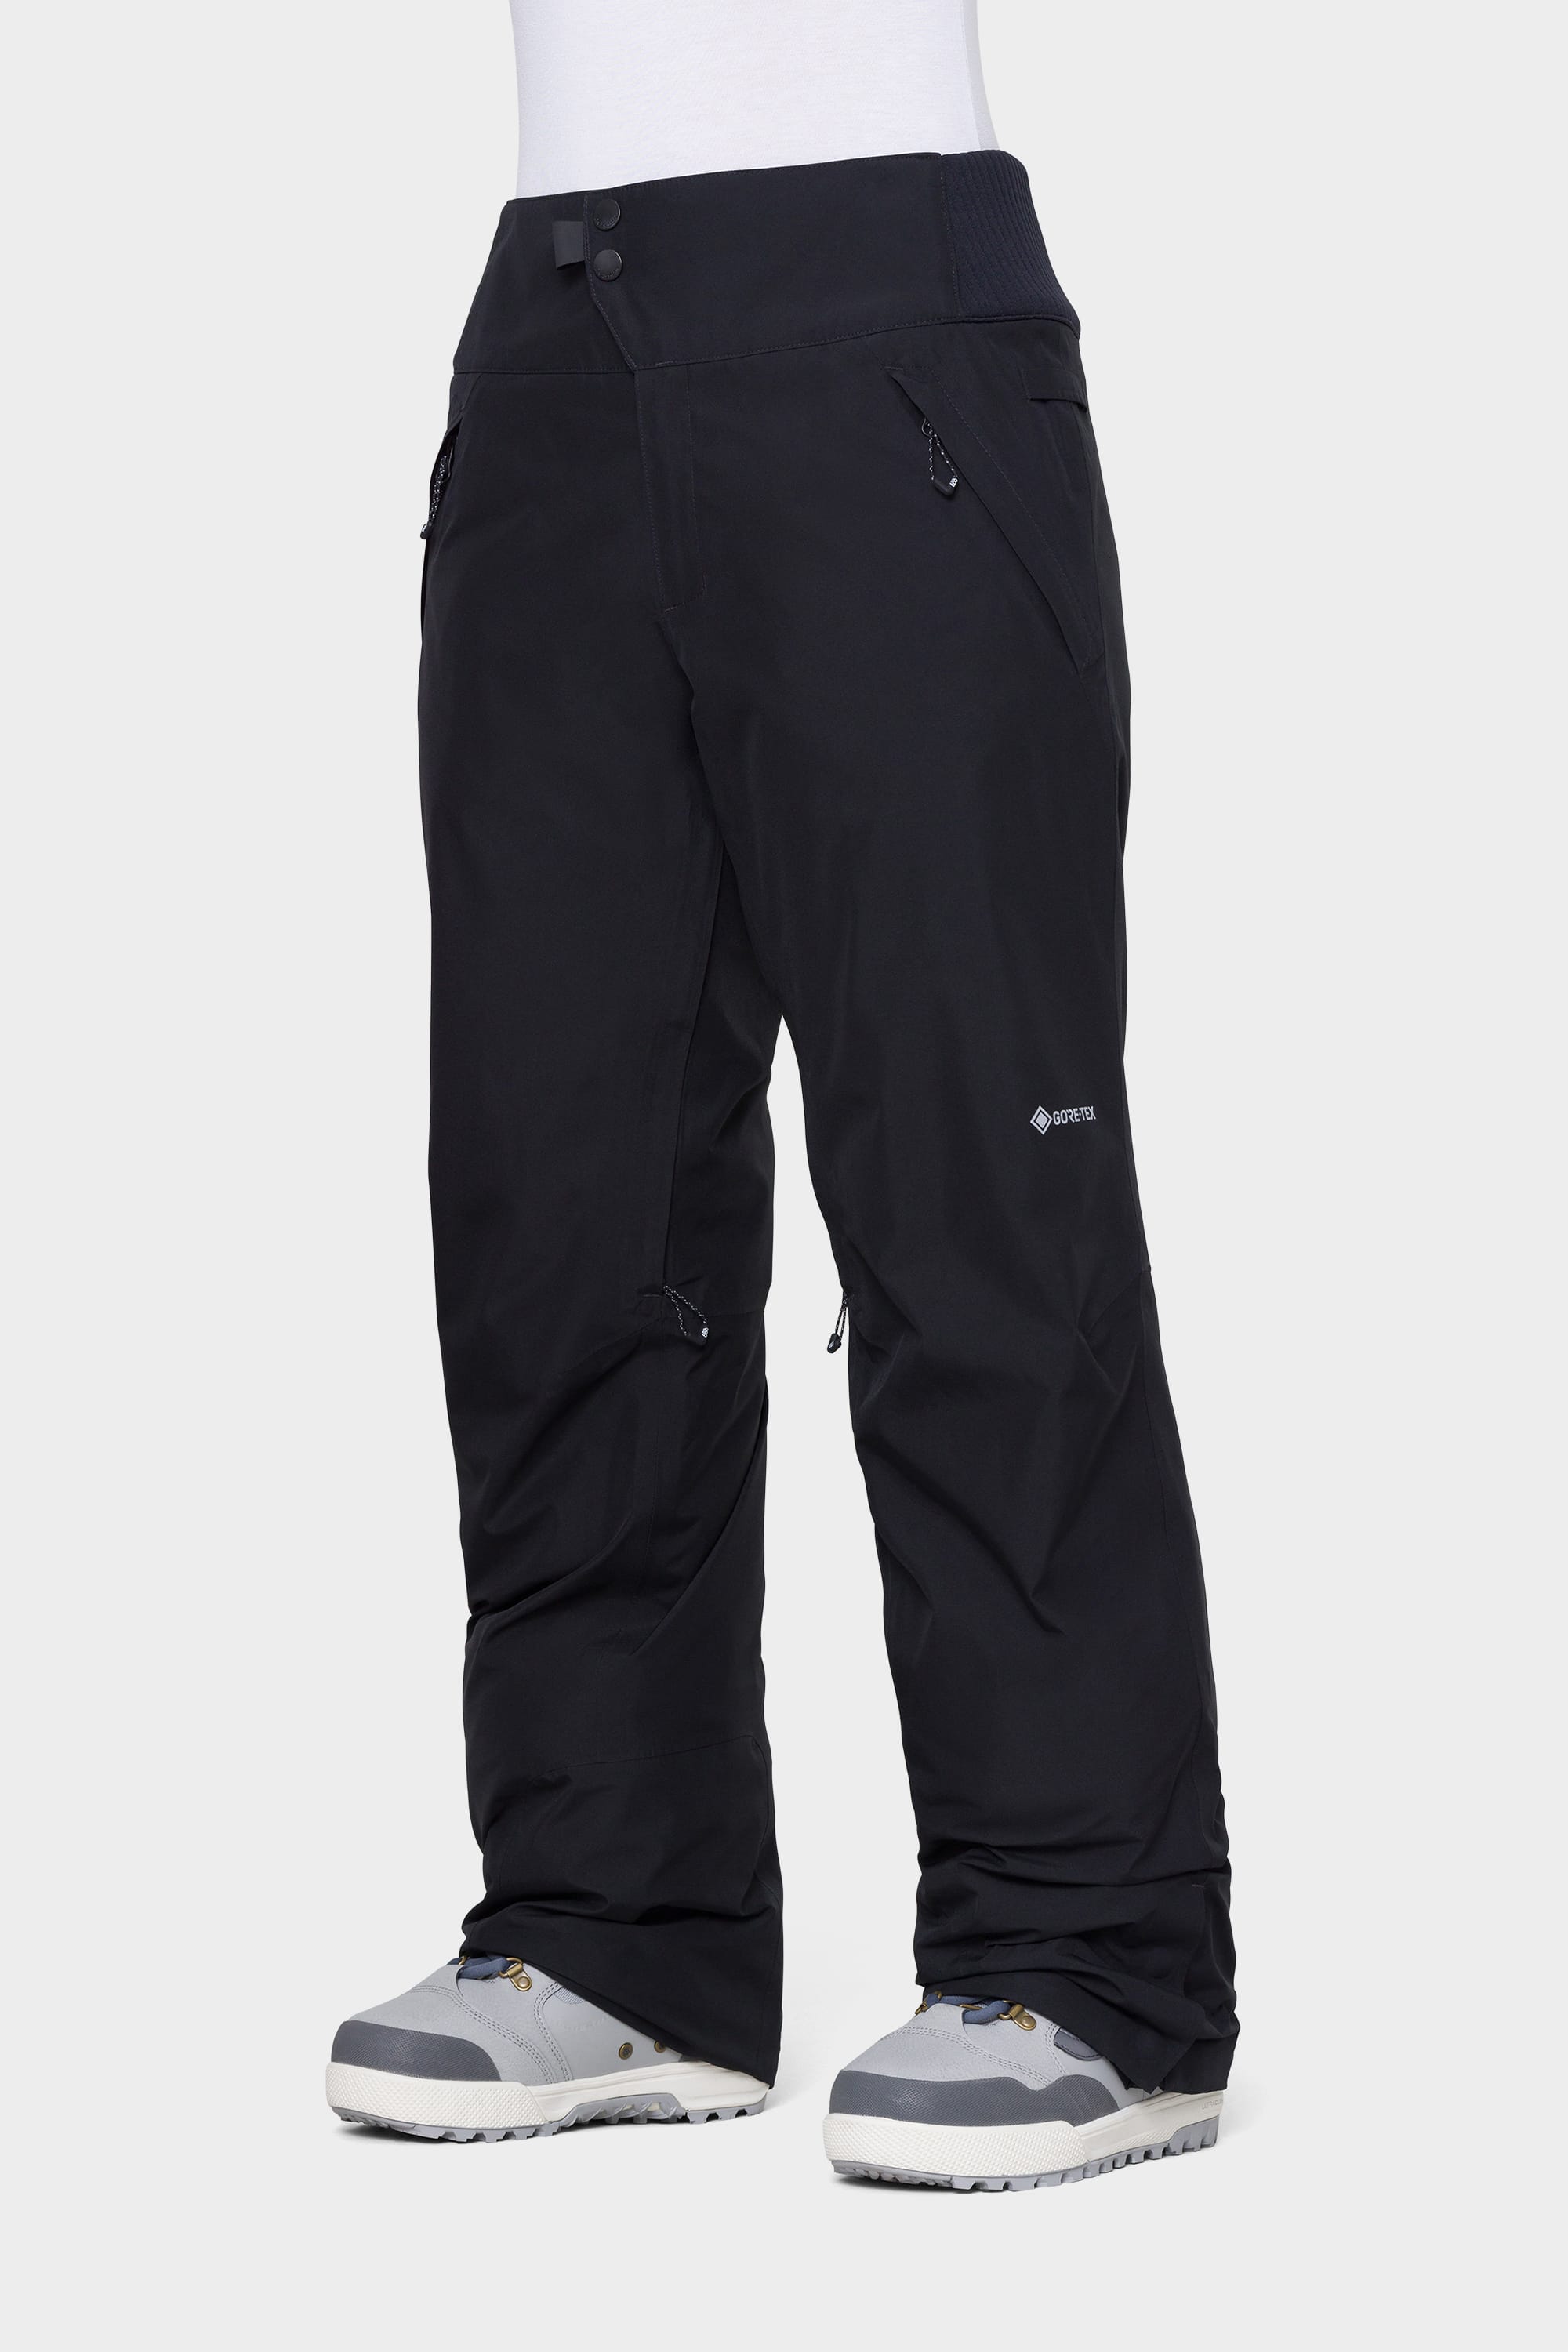 686 Standard Women's Snowboard Pants - Black